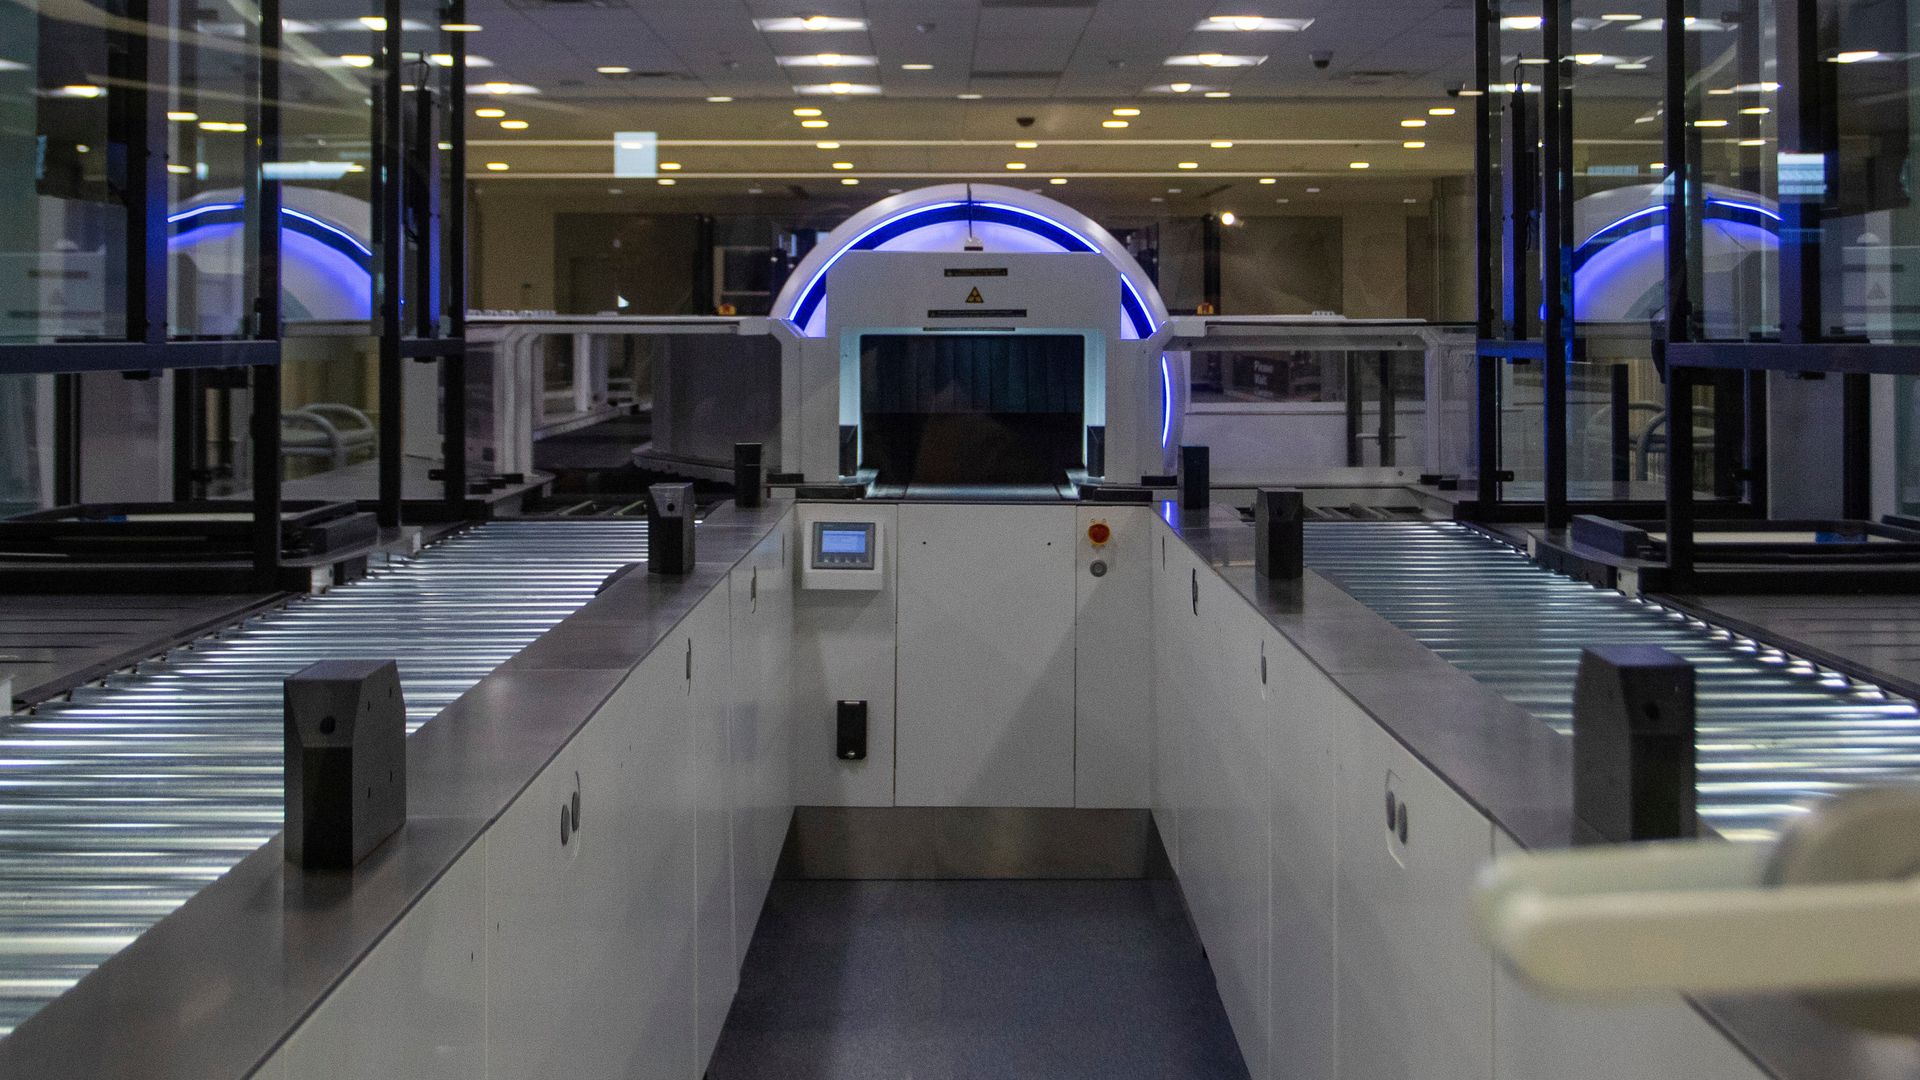 In an effort to reduce waiting times, Harry Reid International Airport in Las Vegas has introduced new self-screening lanes.